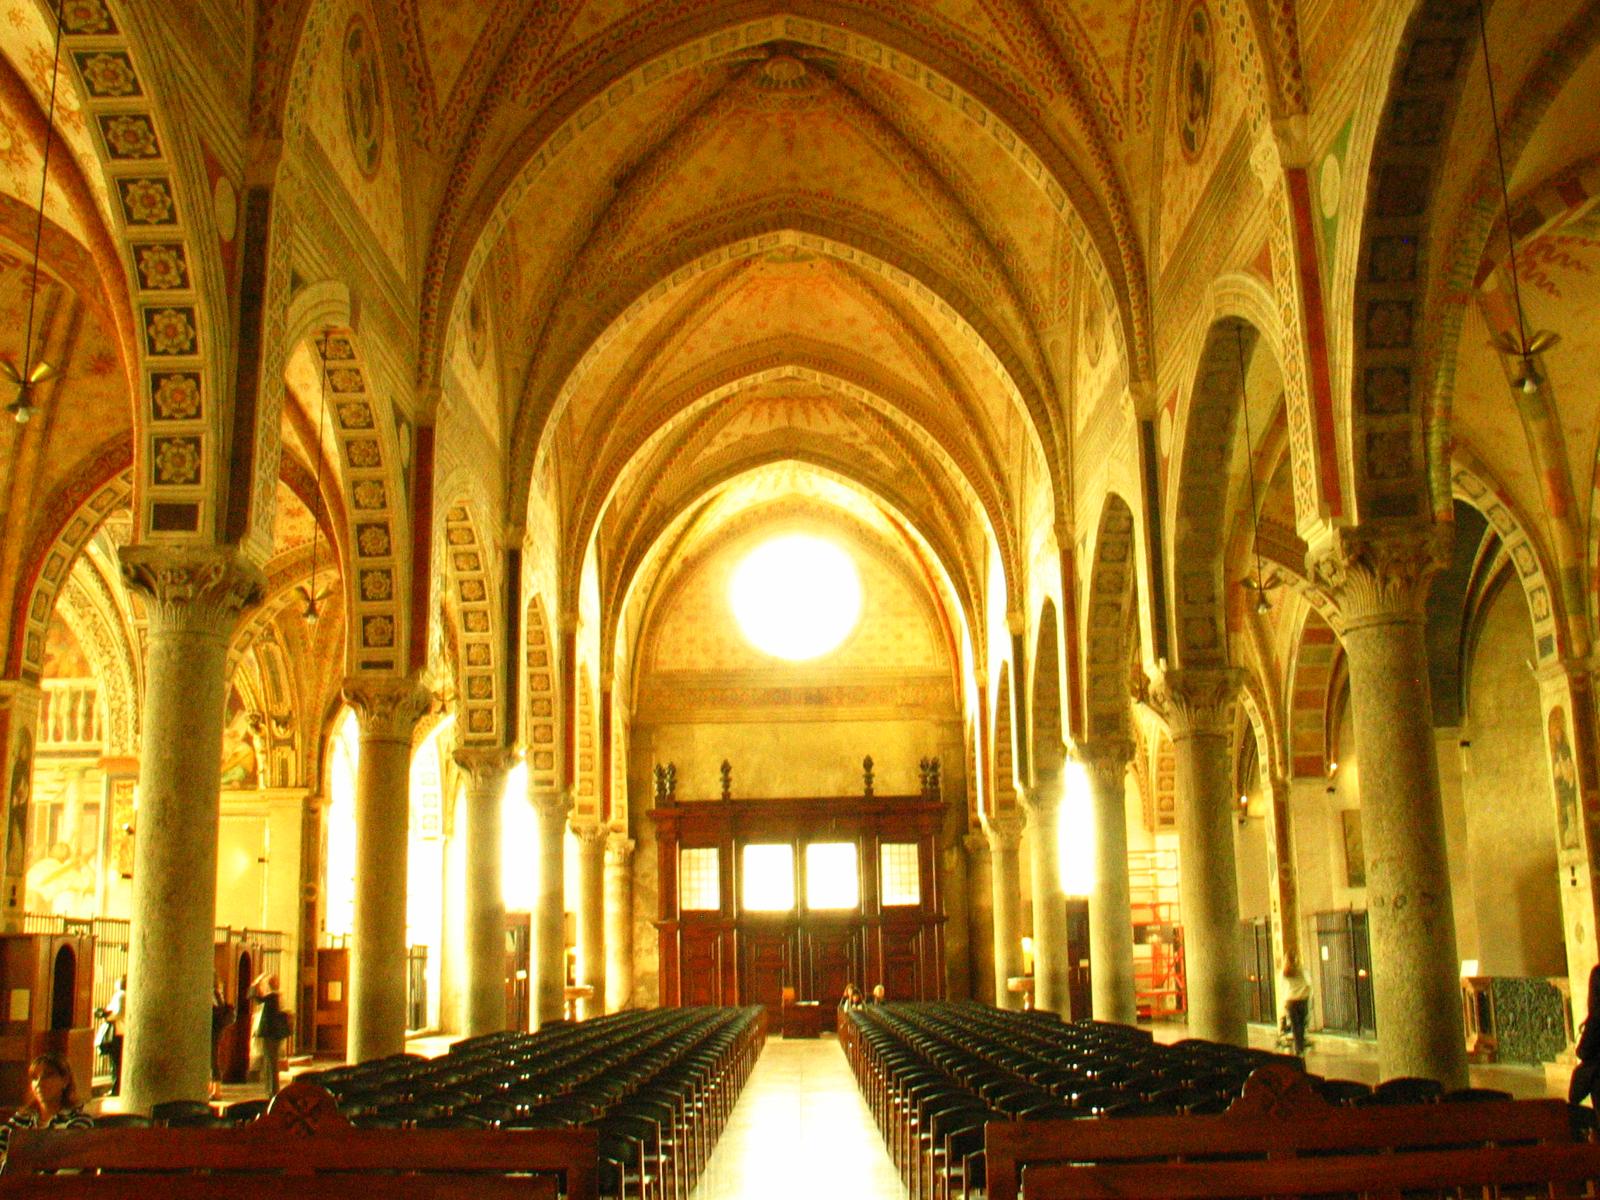 Inside a church